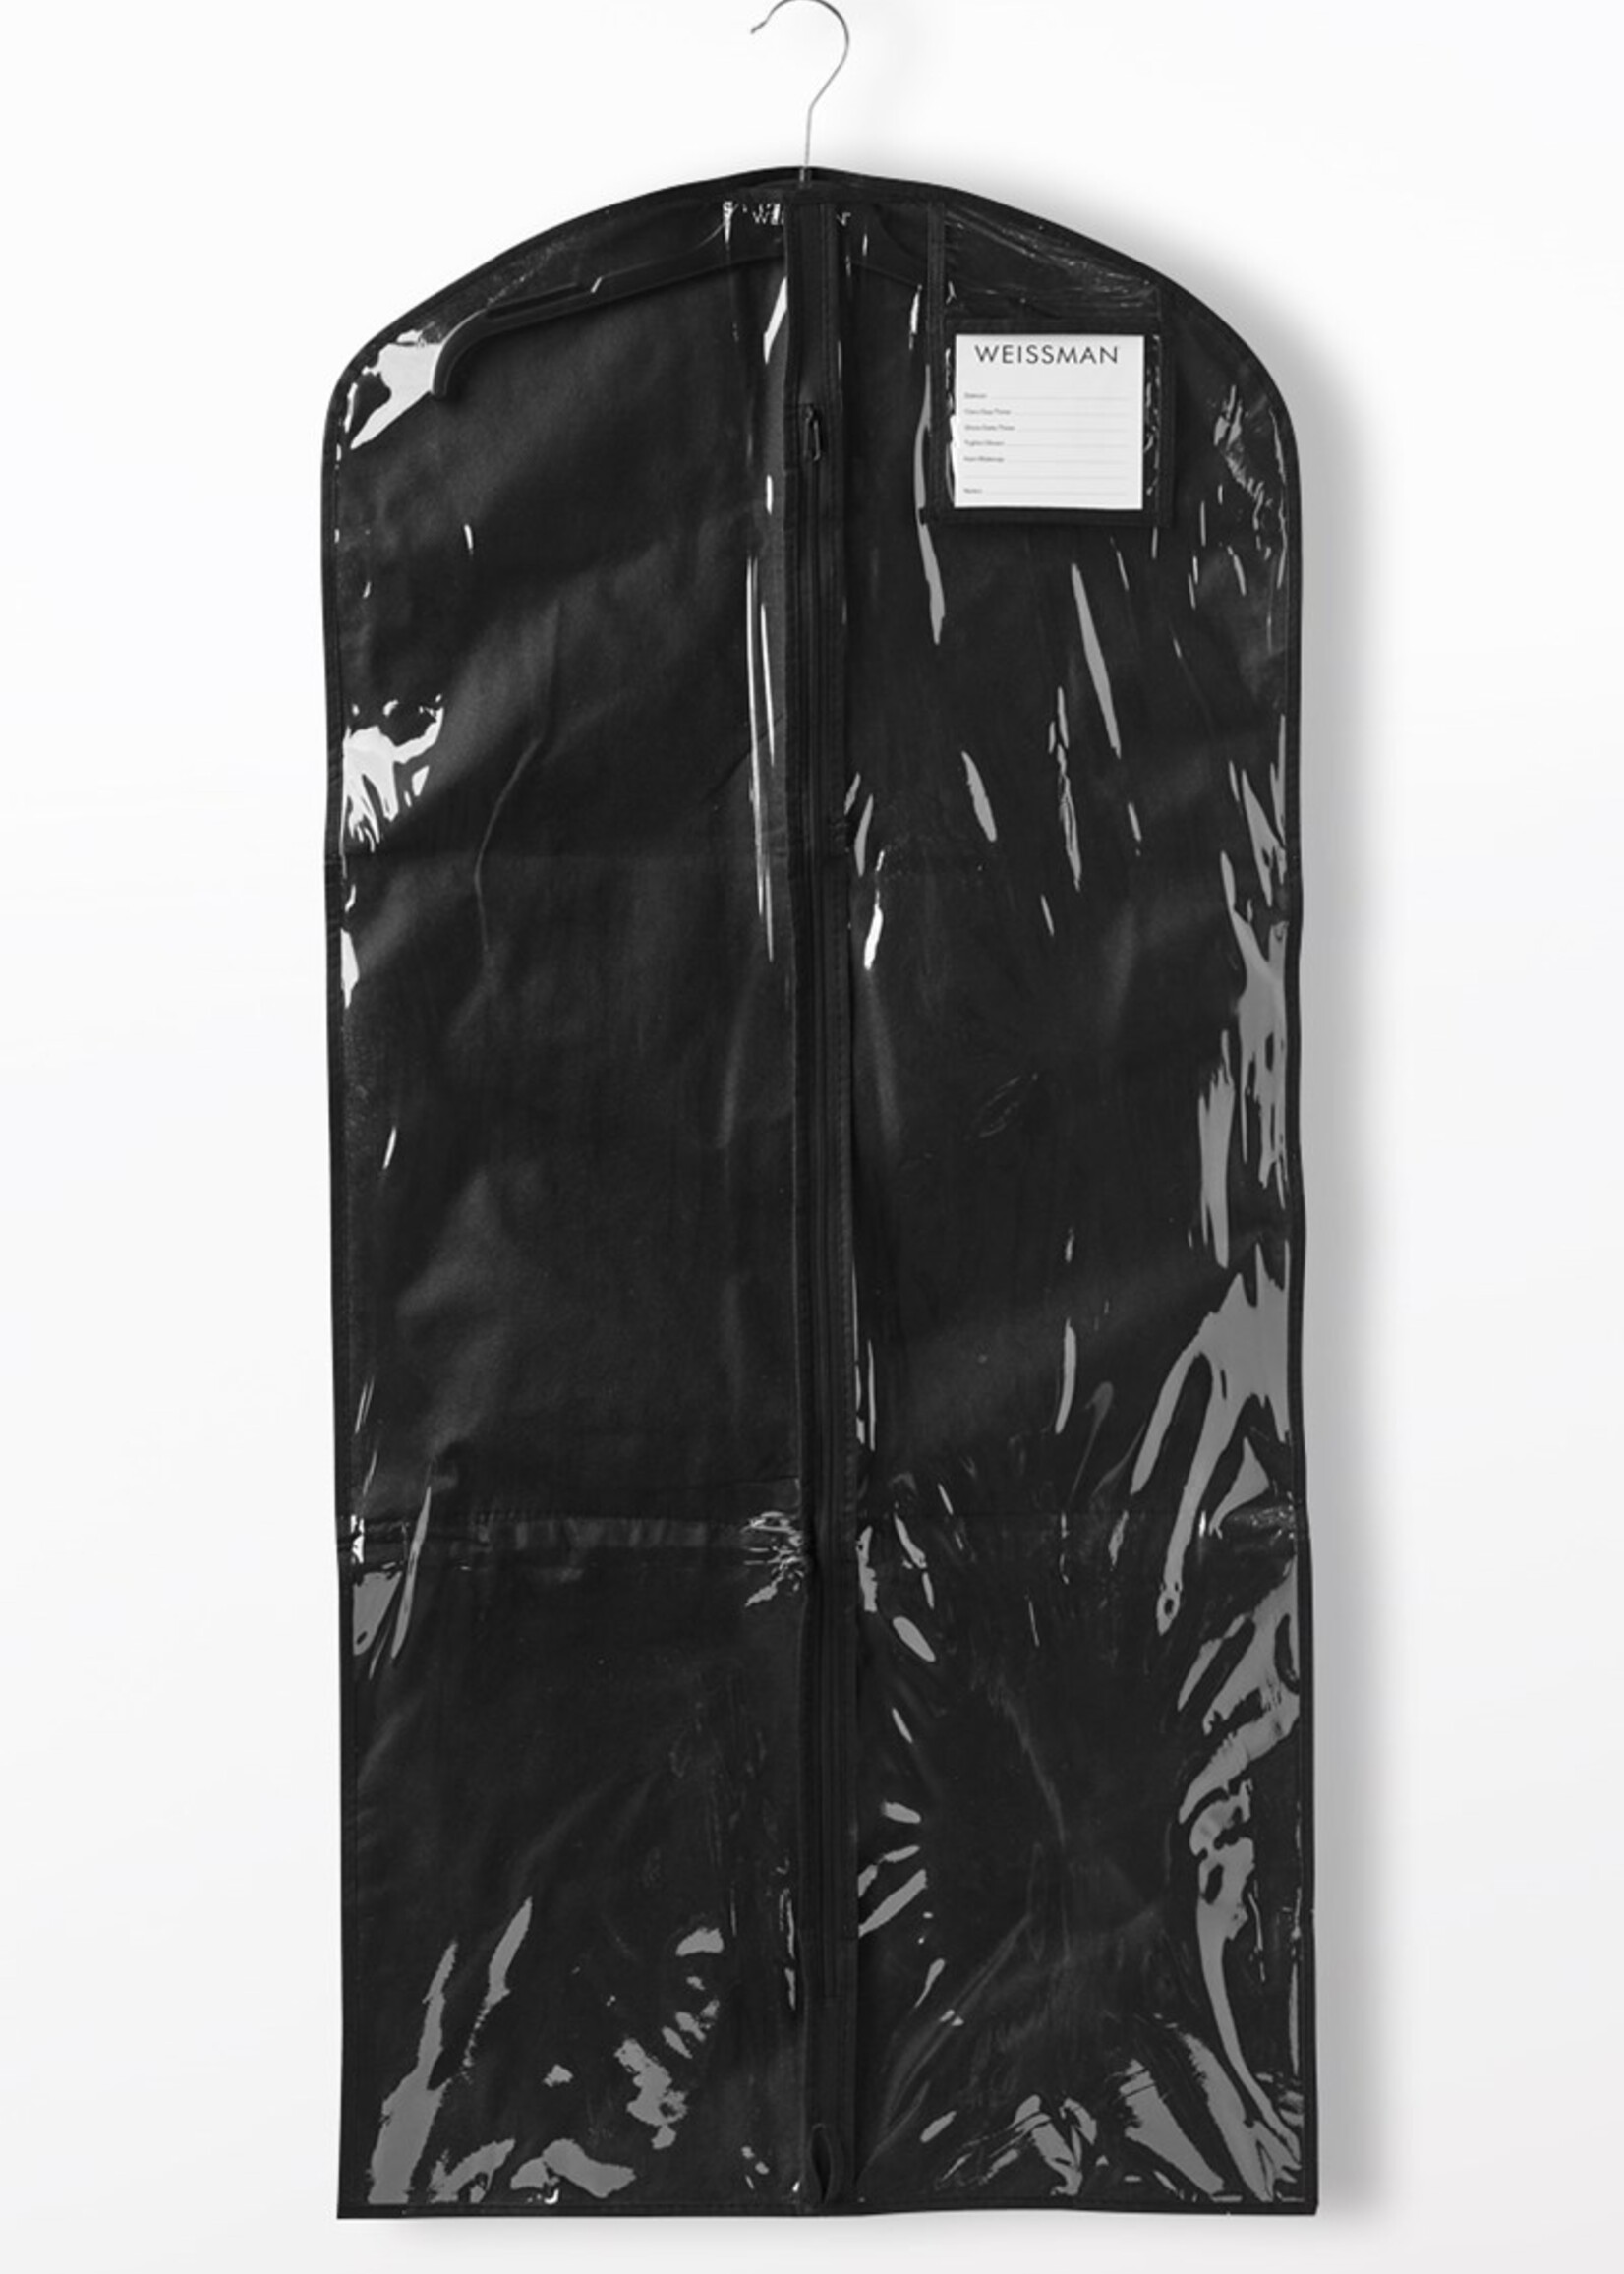 GB2000 Black Clear Garment Bag